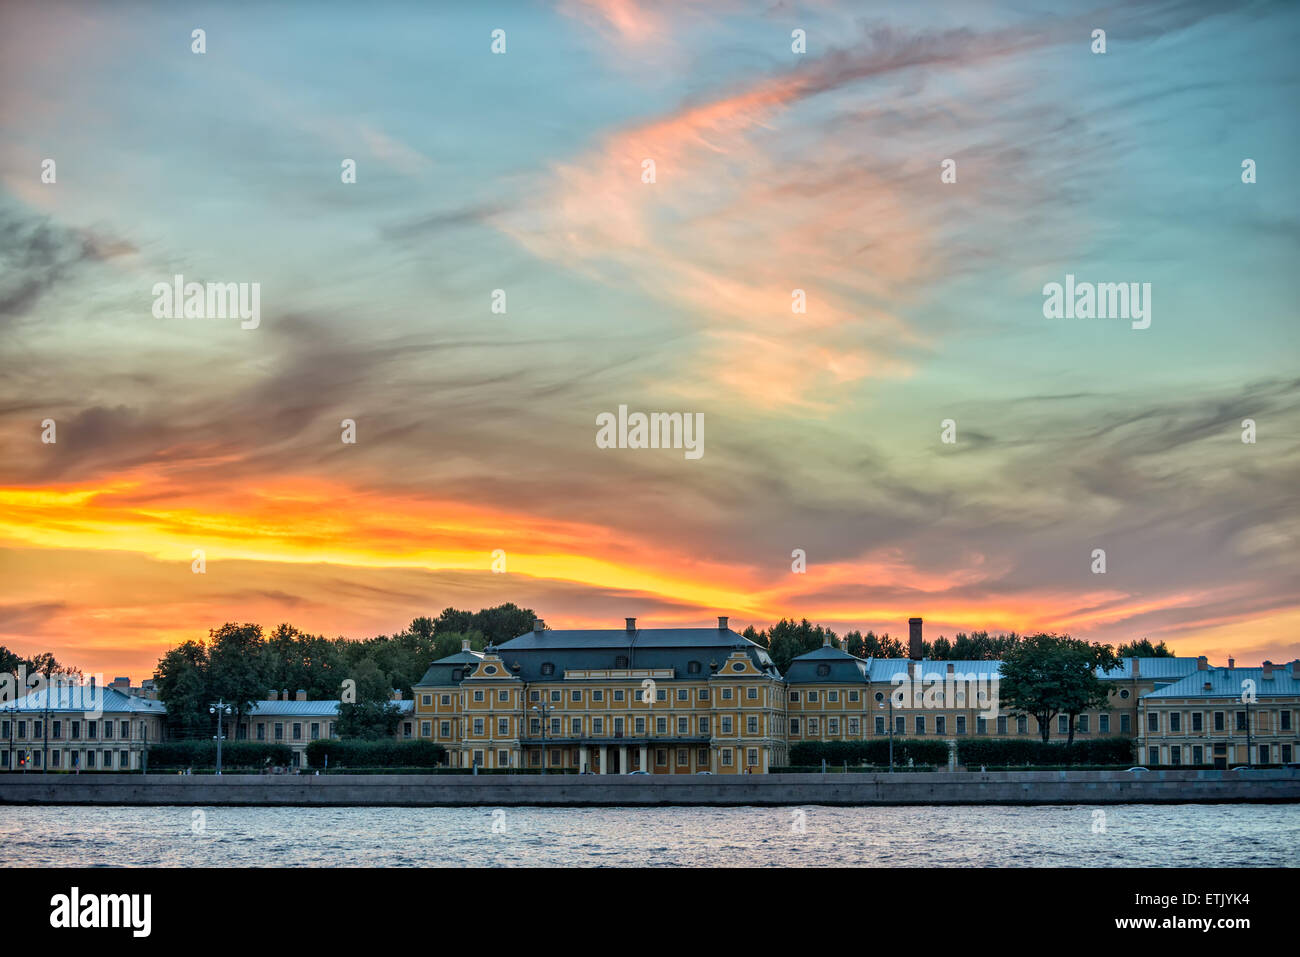 Sonnenuntergang Himmel und Menschikow-Palast in St. Petersburg. Russland Stockfoto